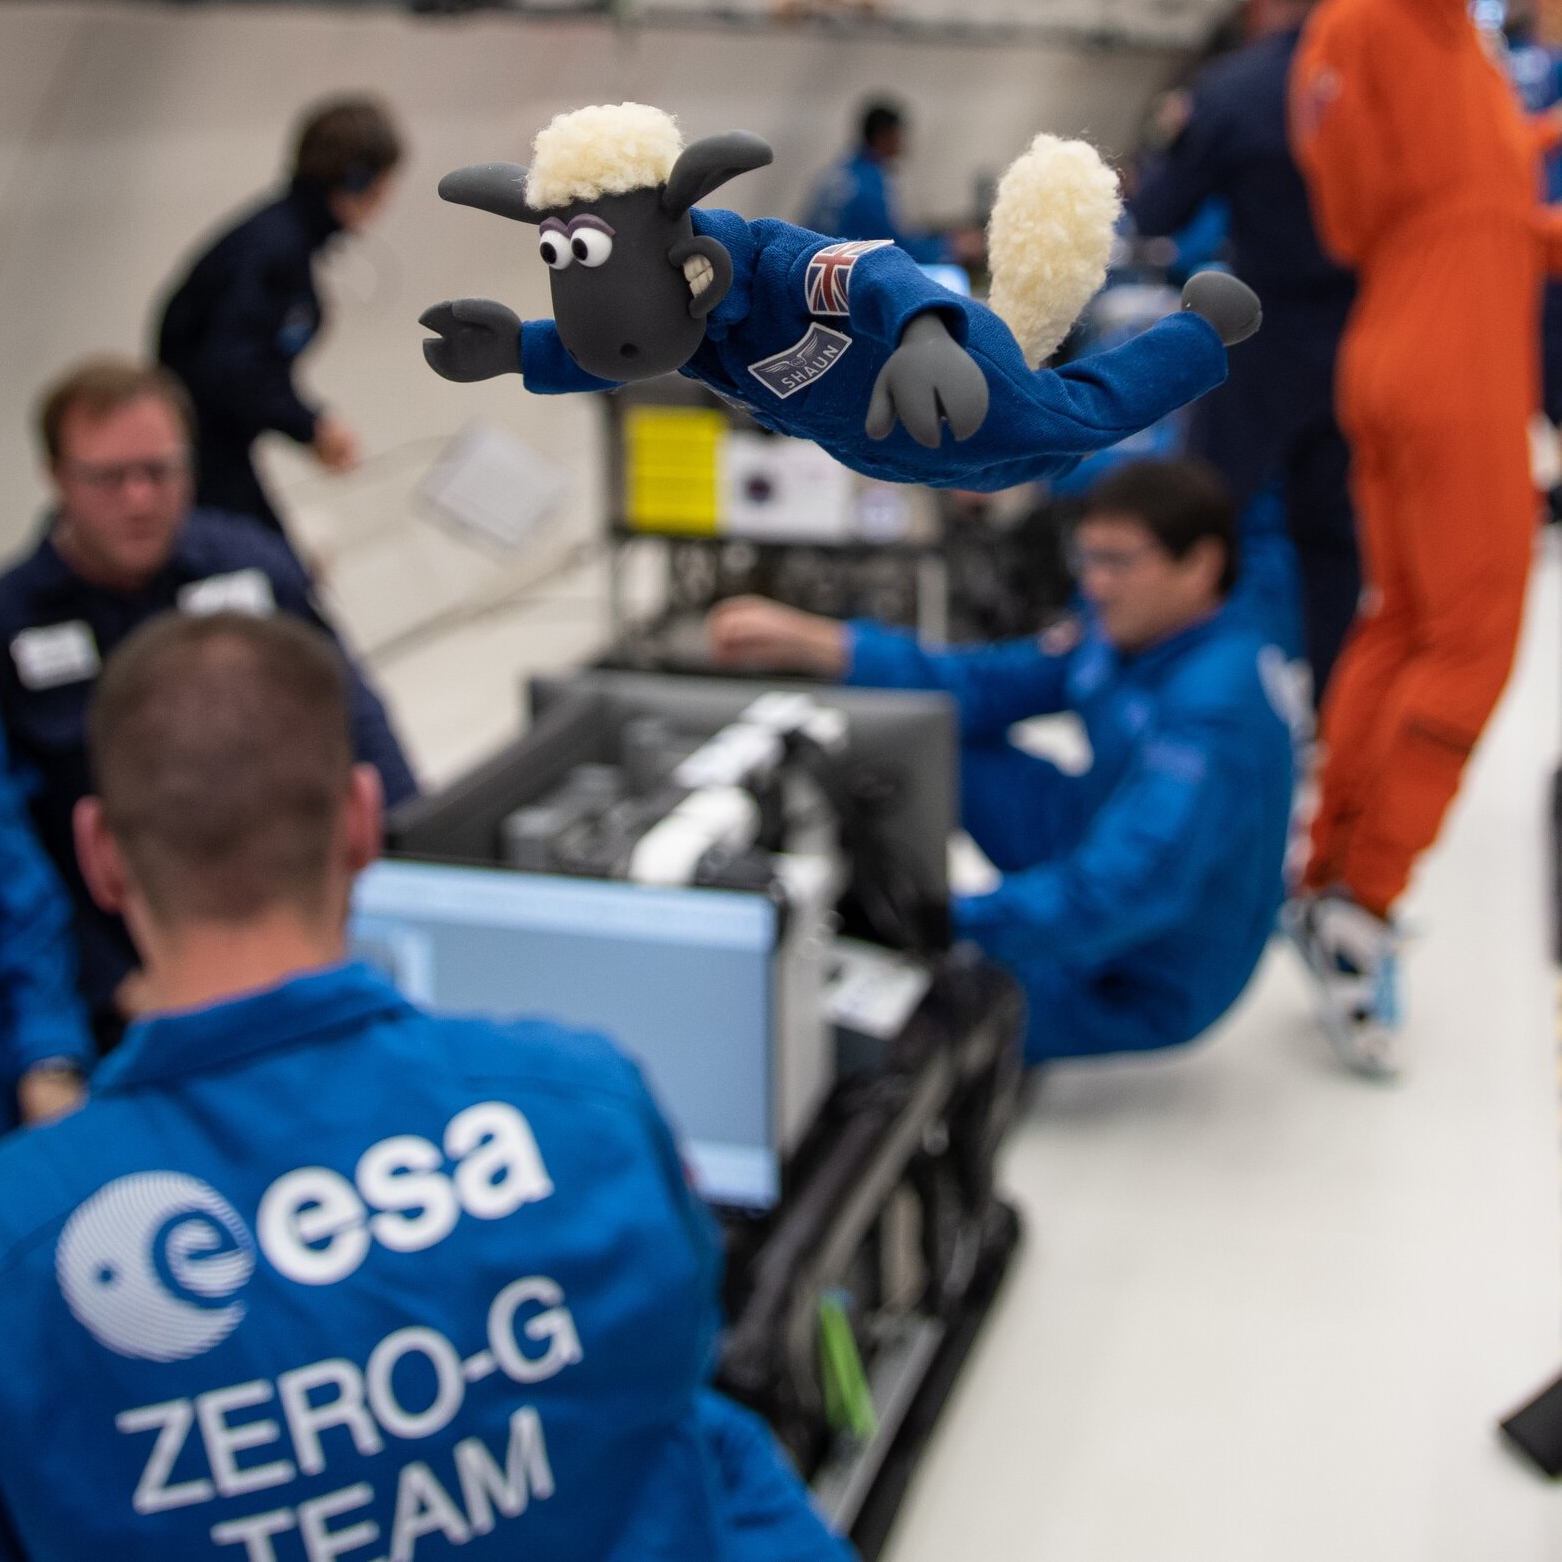 Shaun the Sheep experiencing microgravity on ESA parabolic flight pillars credits ESA/Aardman